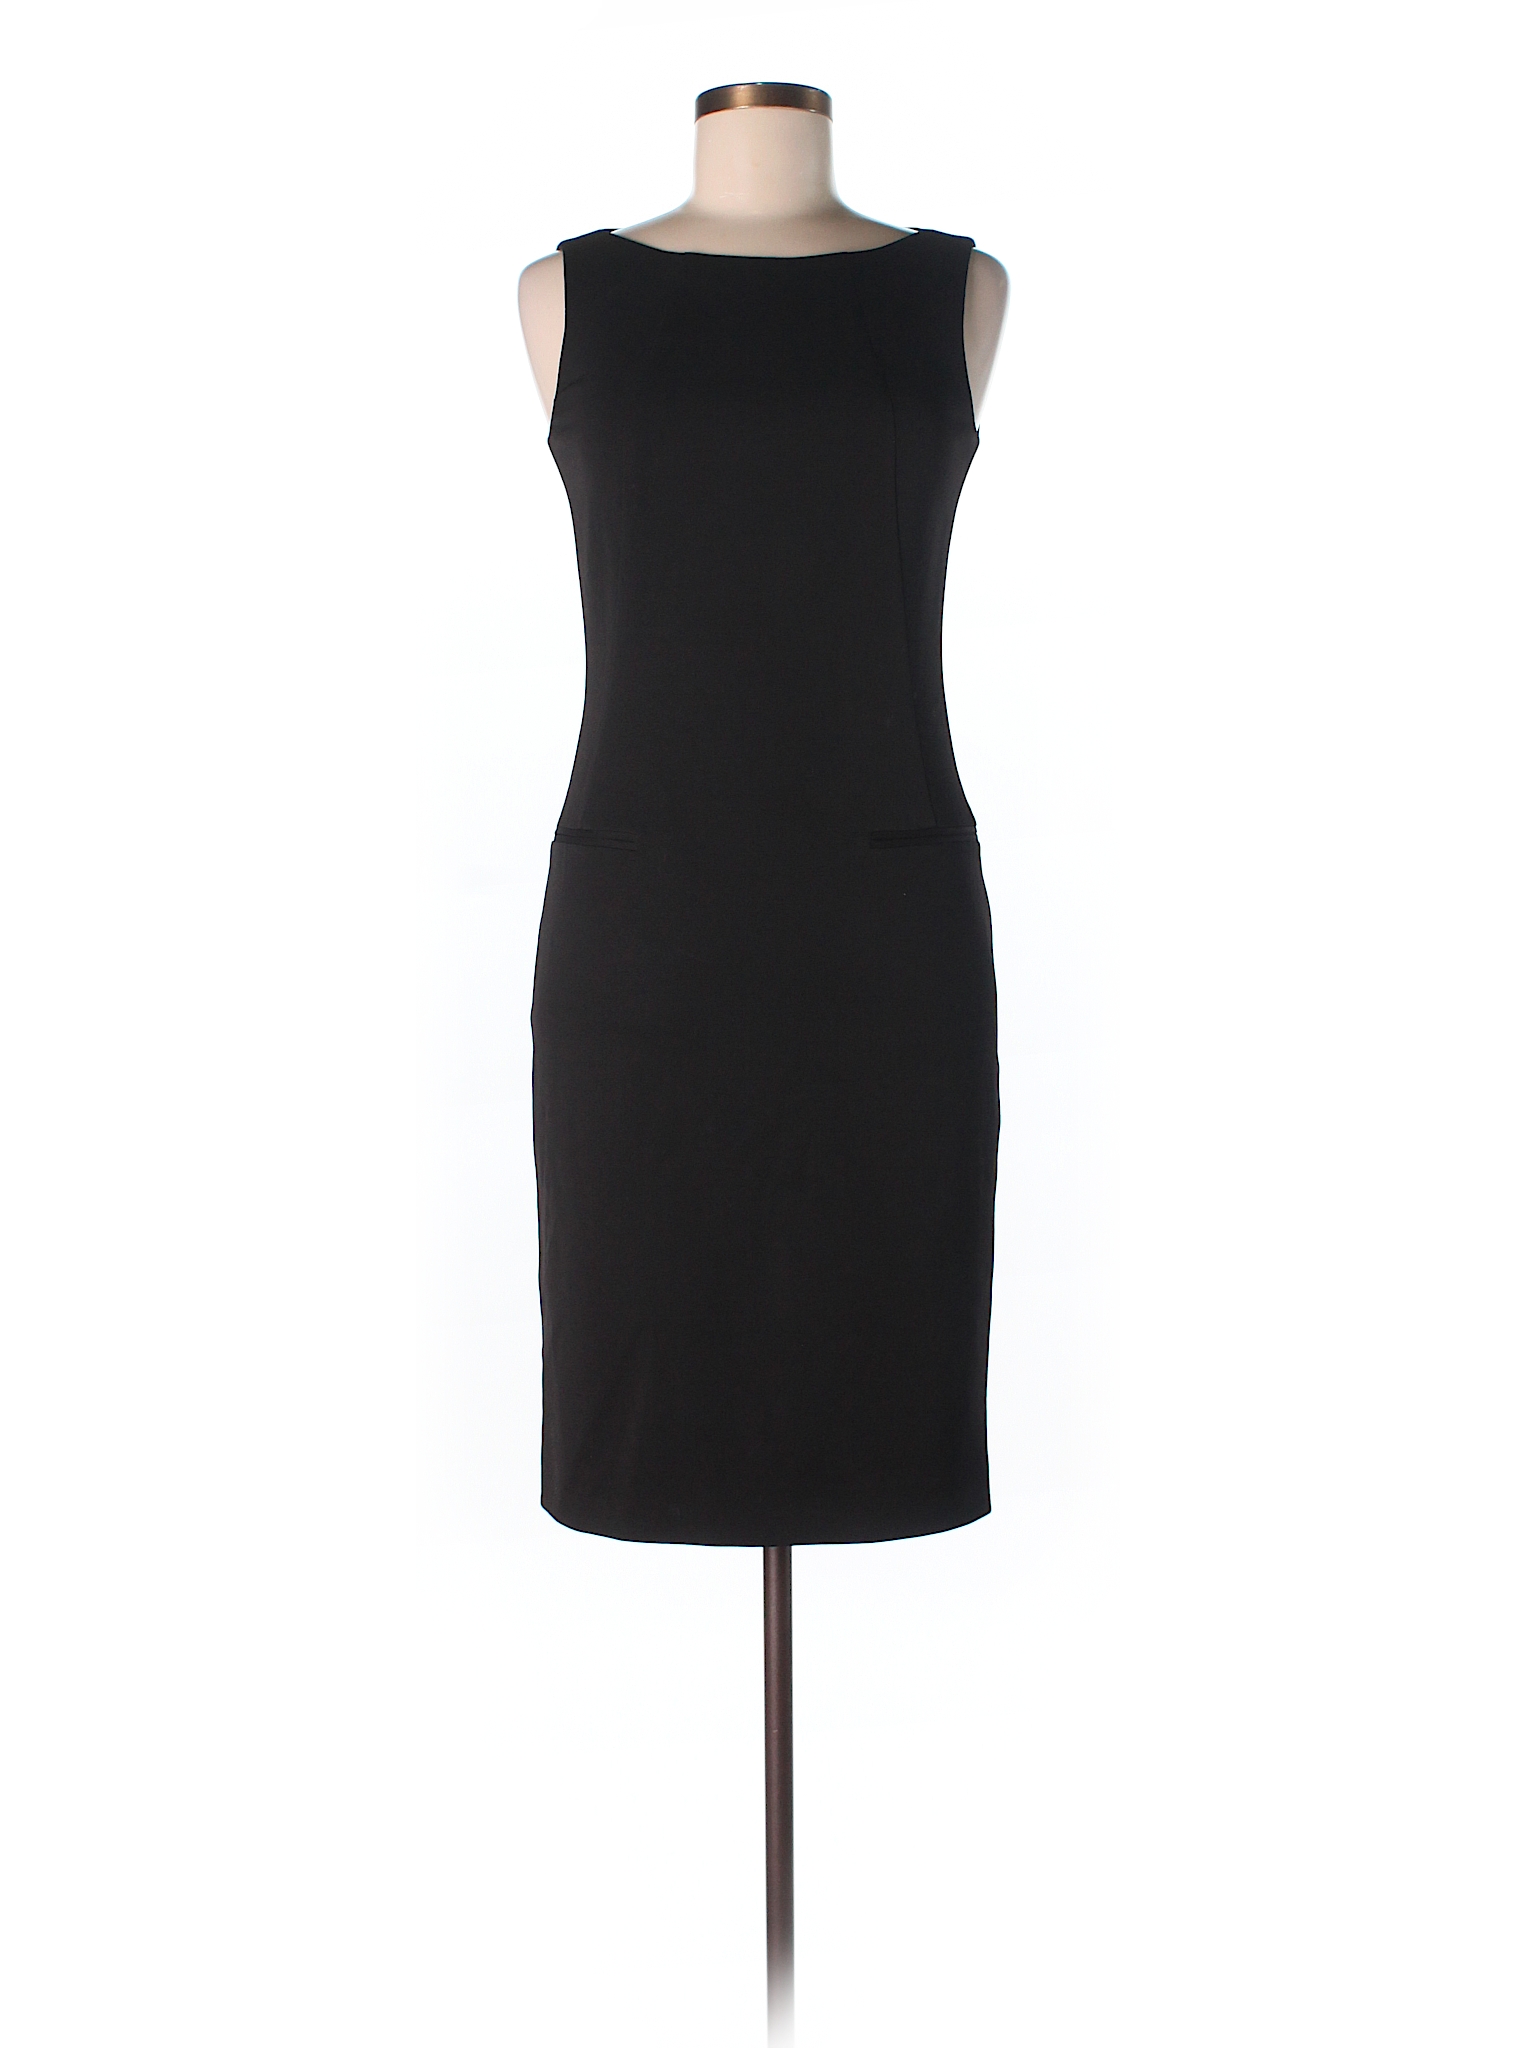 BOSS by HUGO BOSS Solid Black Wool Dress Size 2 - 90% off | thredUP